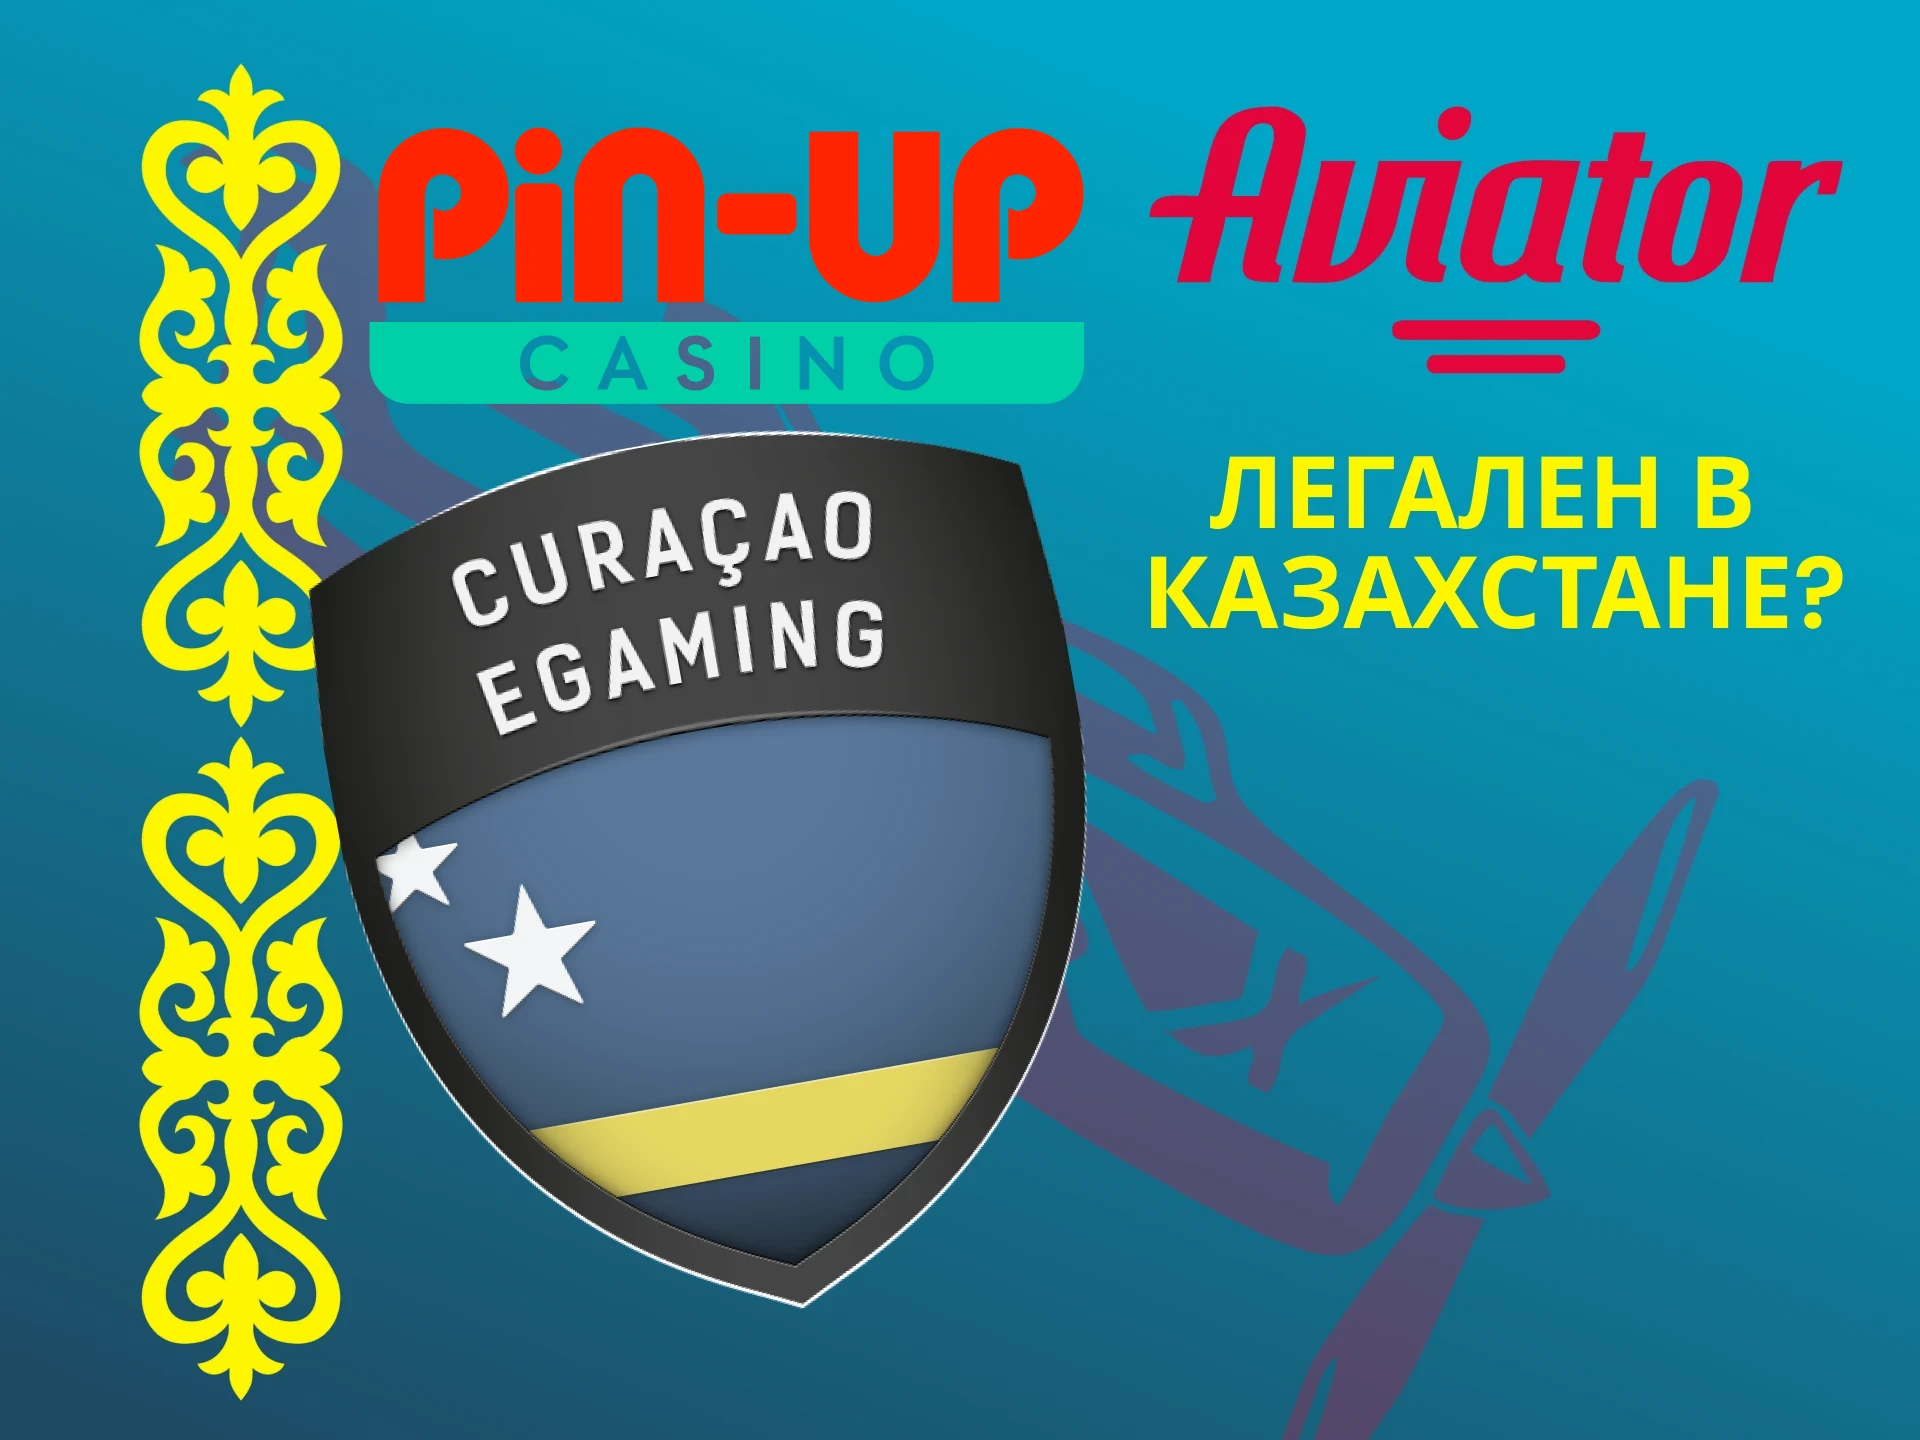 Pin Up лицензирован Curacao Egaming.